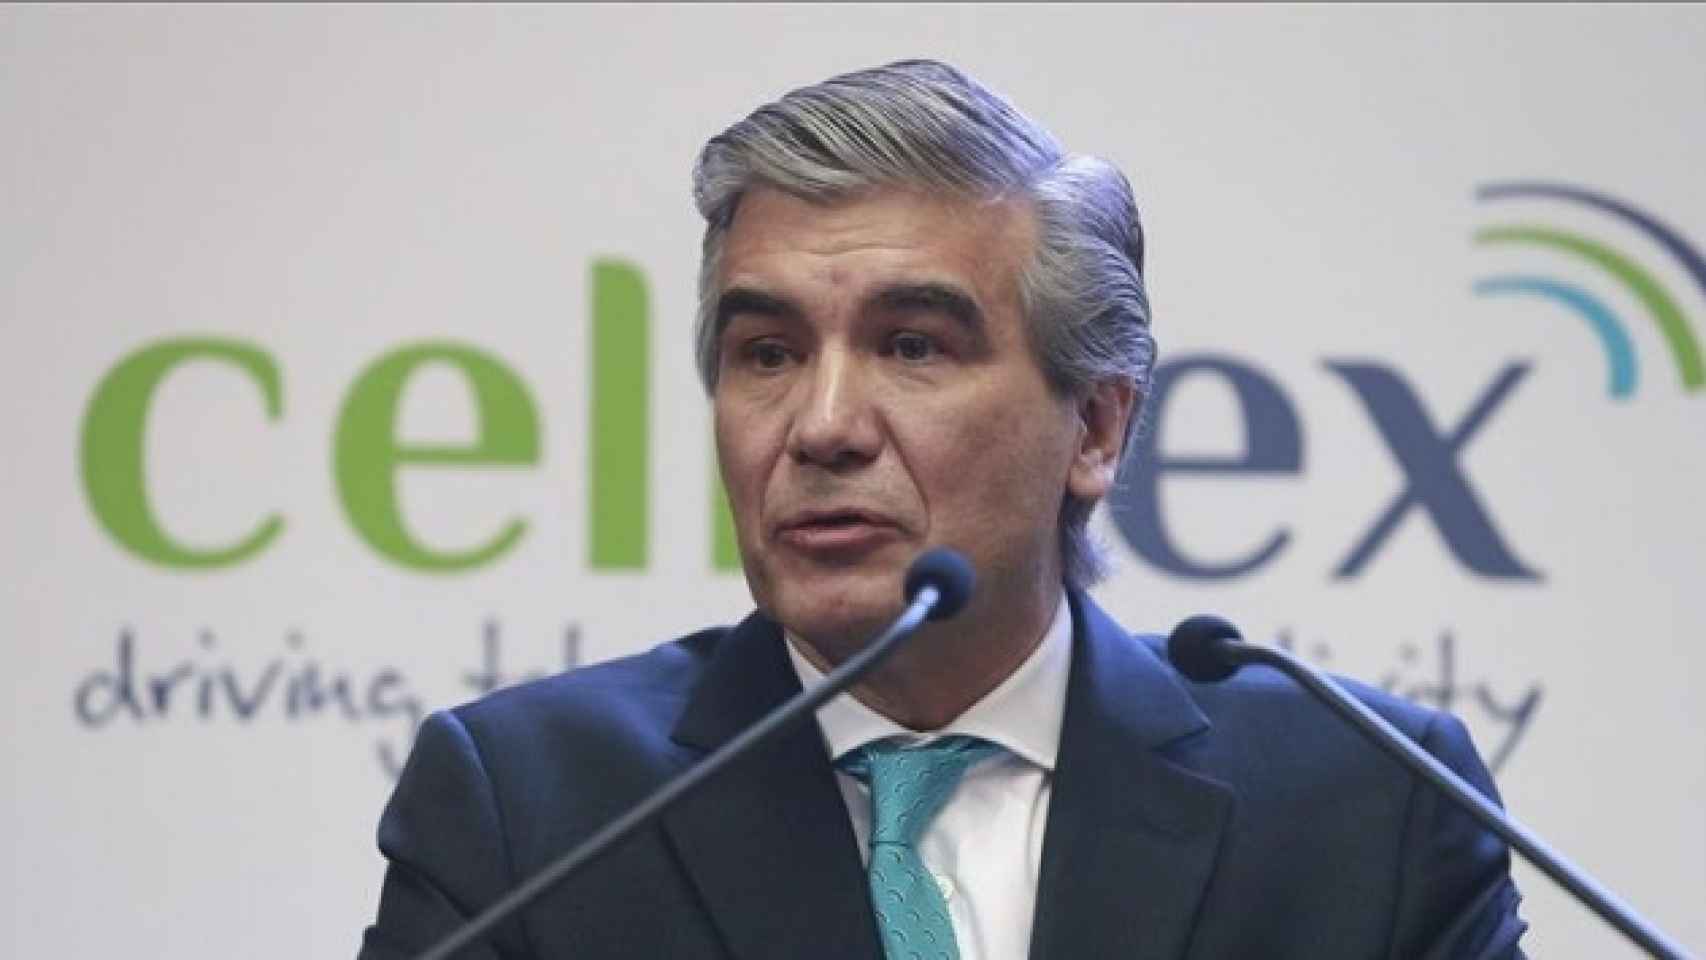 El presidente del grupo Cellnex, Francisco Reynés / CG